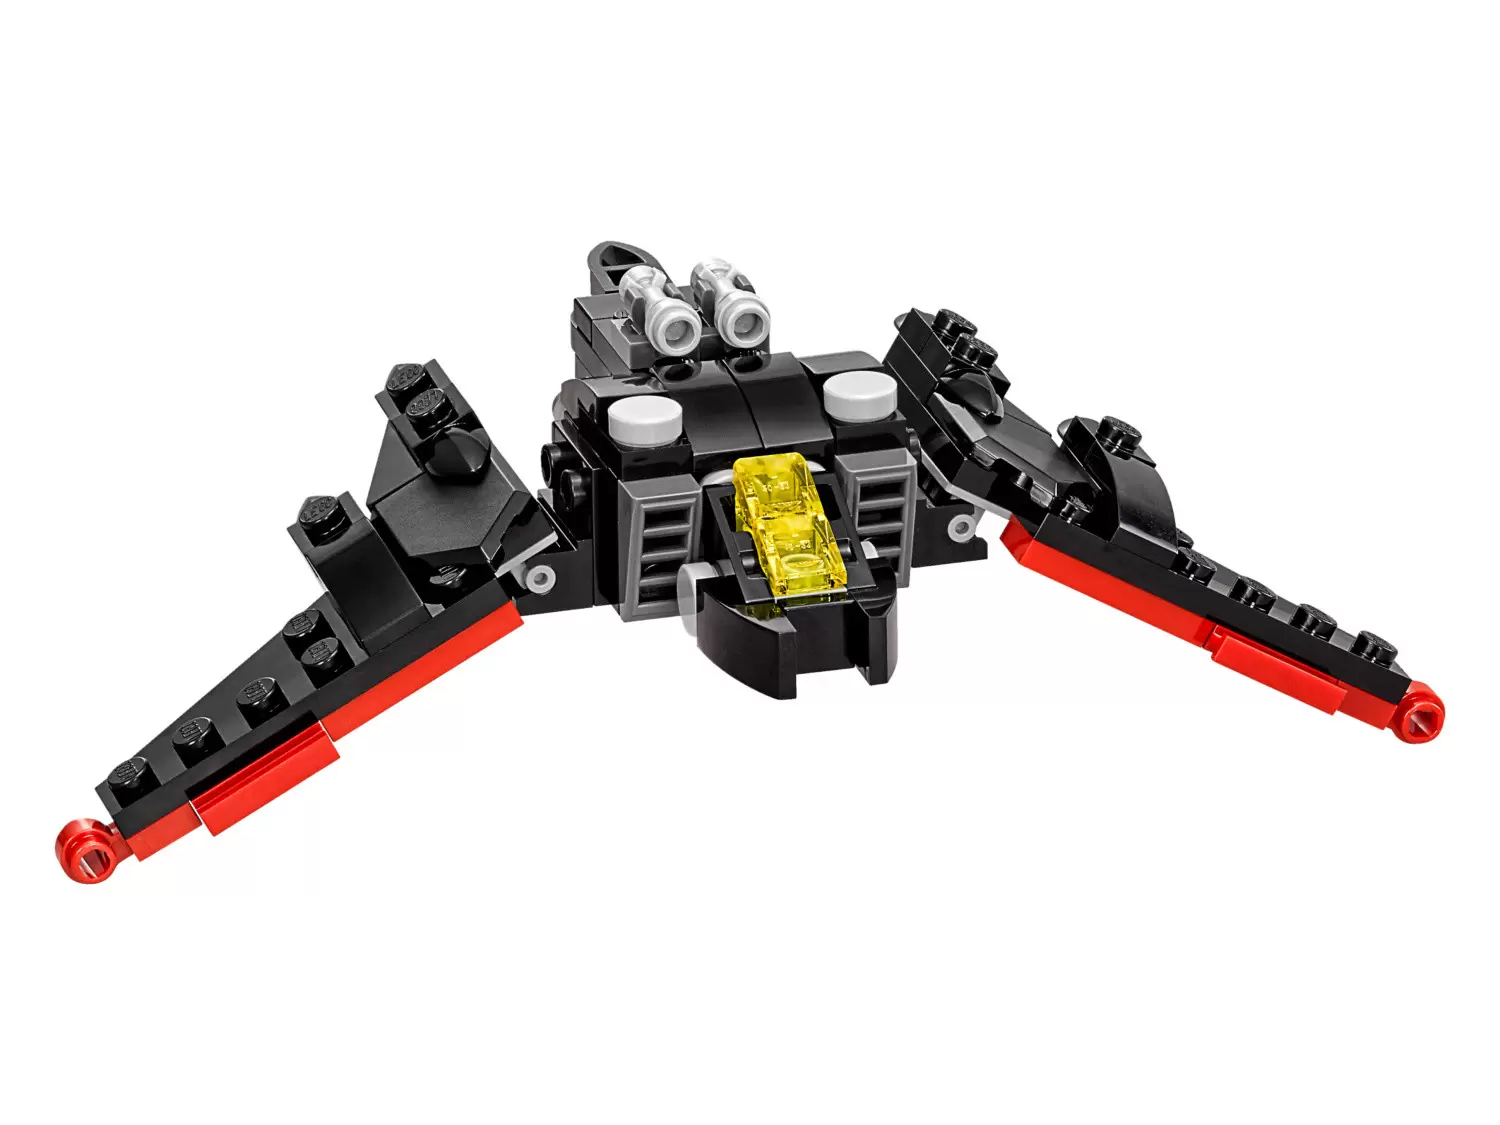 The LEGO Batman Movie - The Mini Batwing